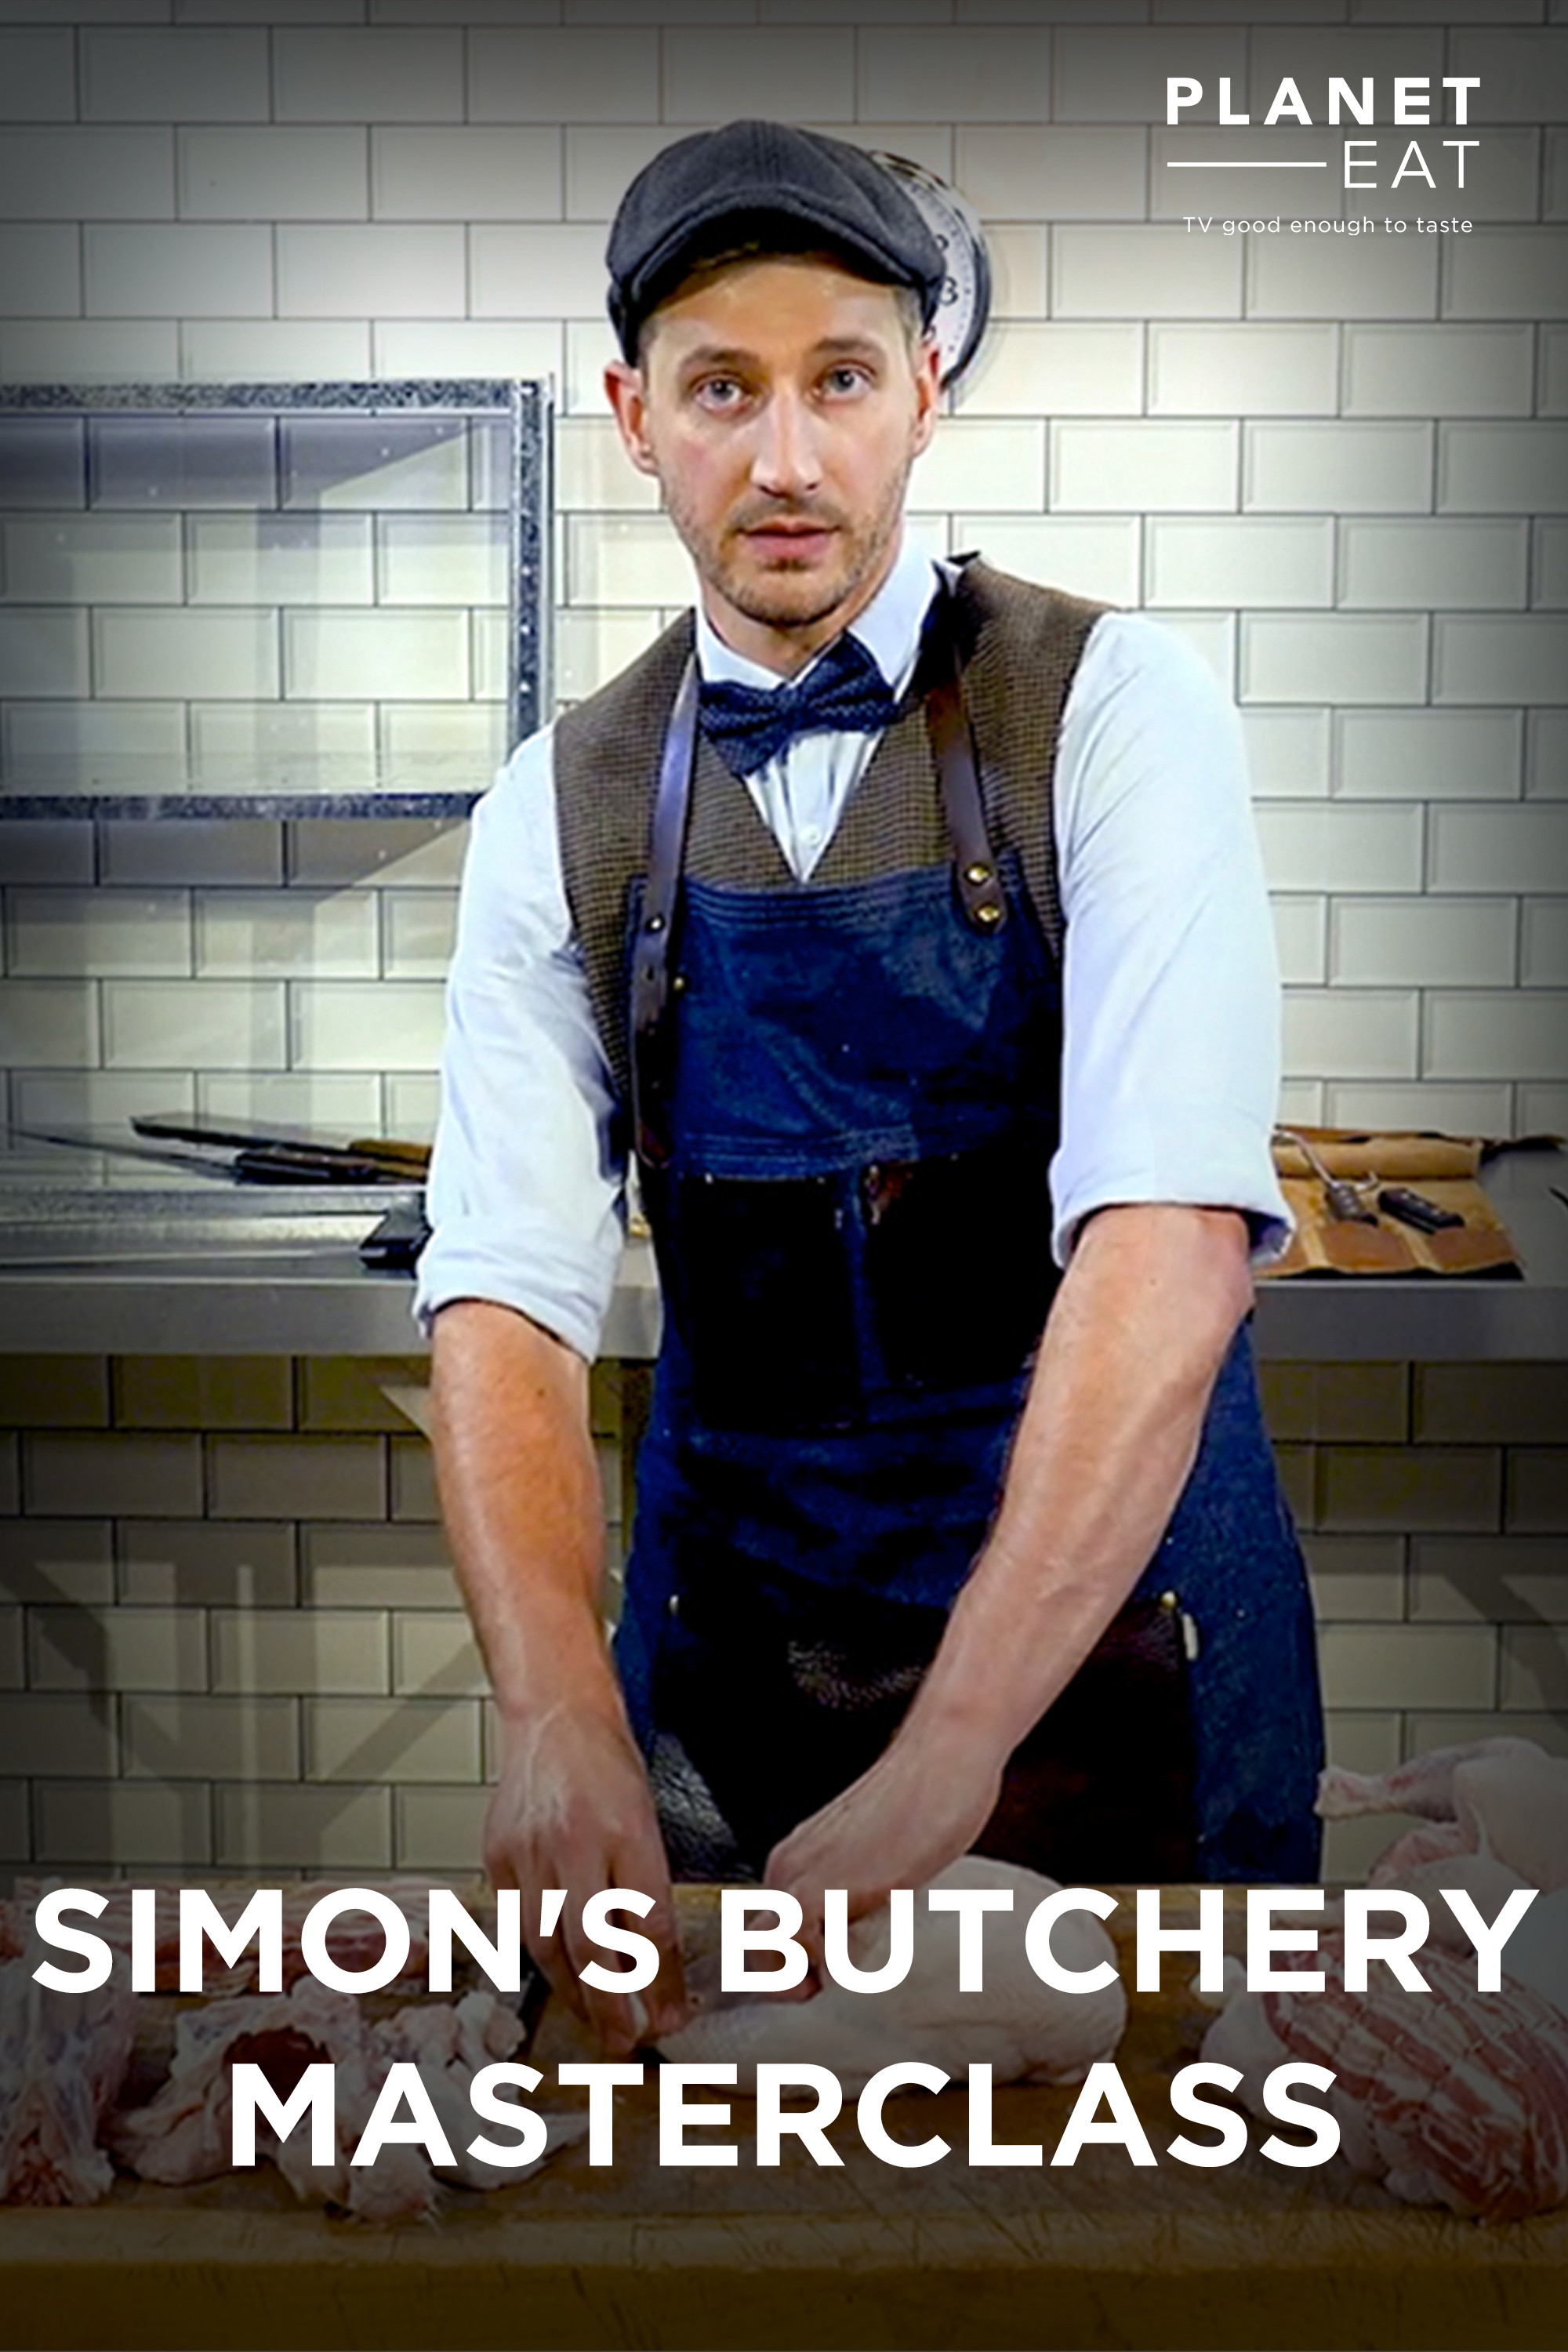 Butchery Masterclass with Simon the Butcher (Planet Eat)